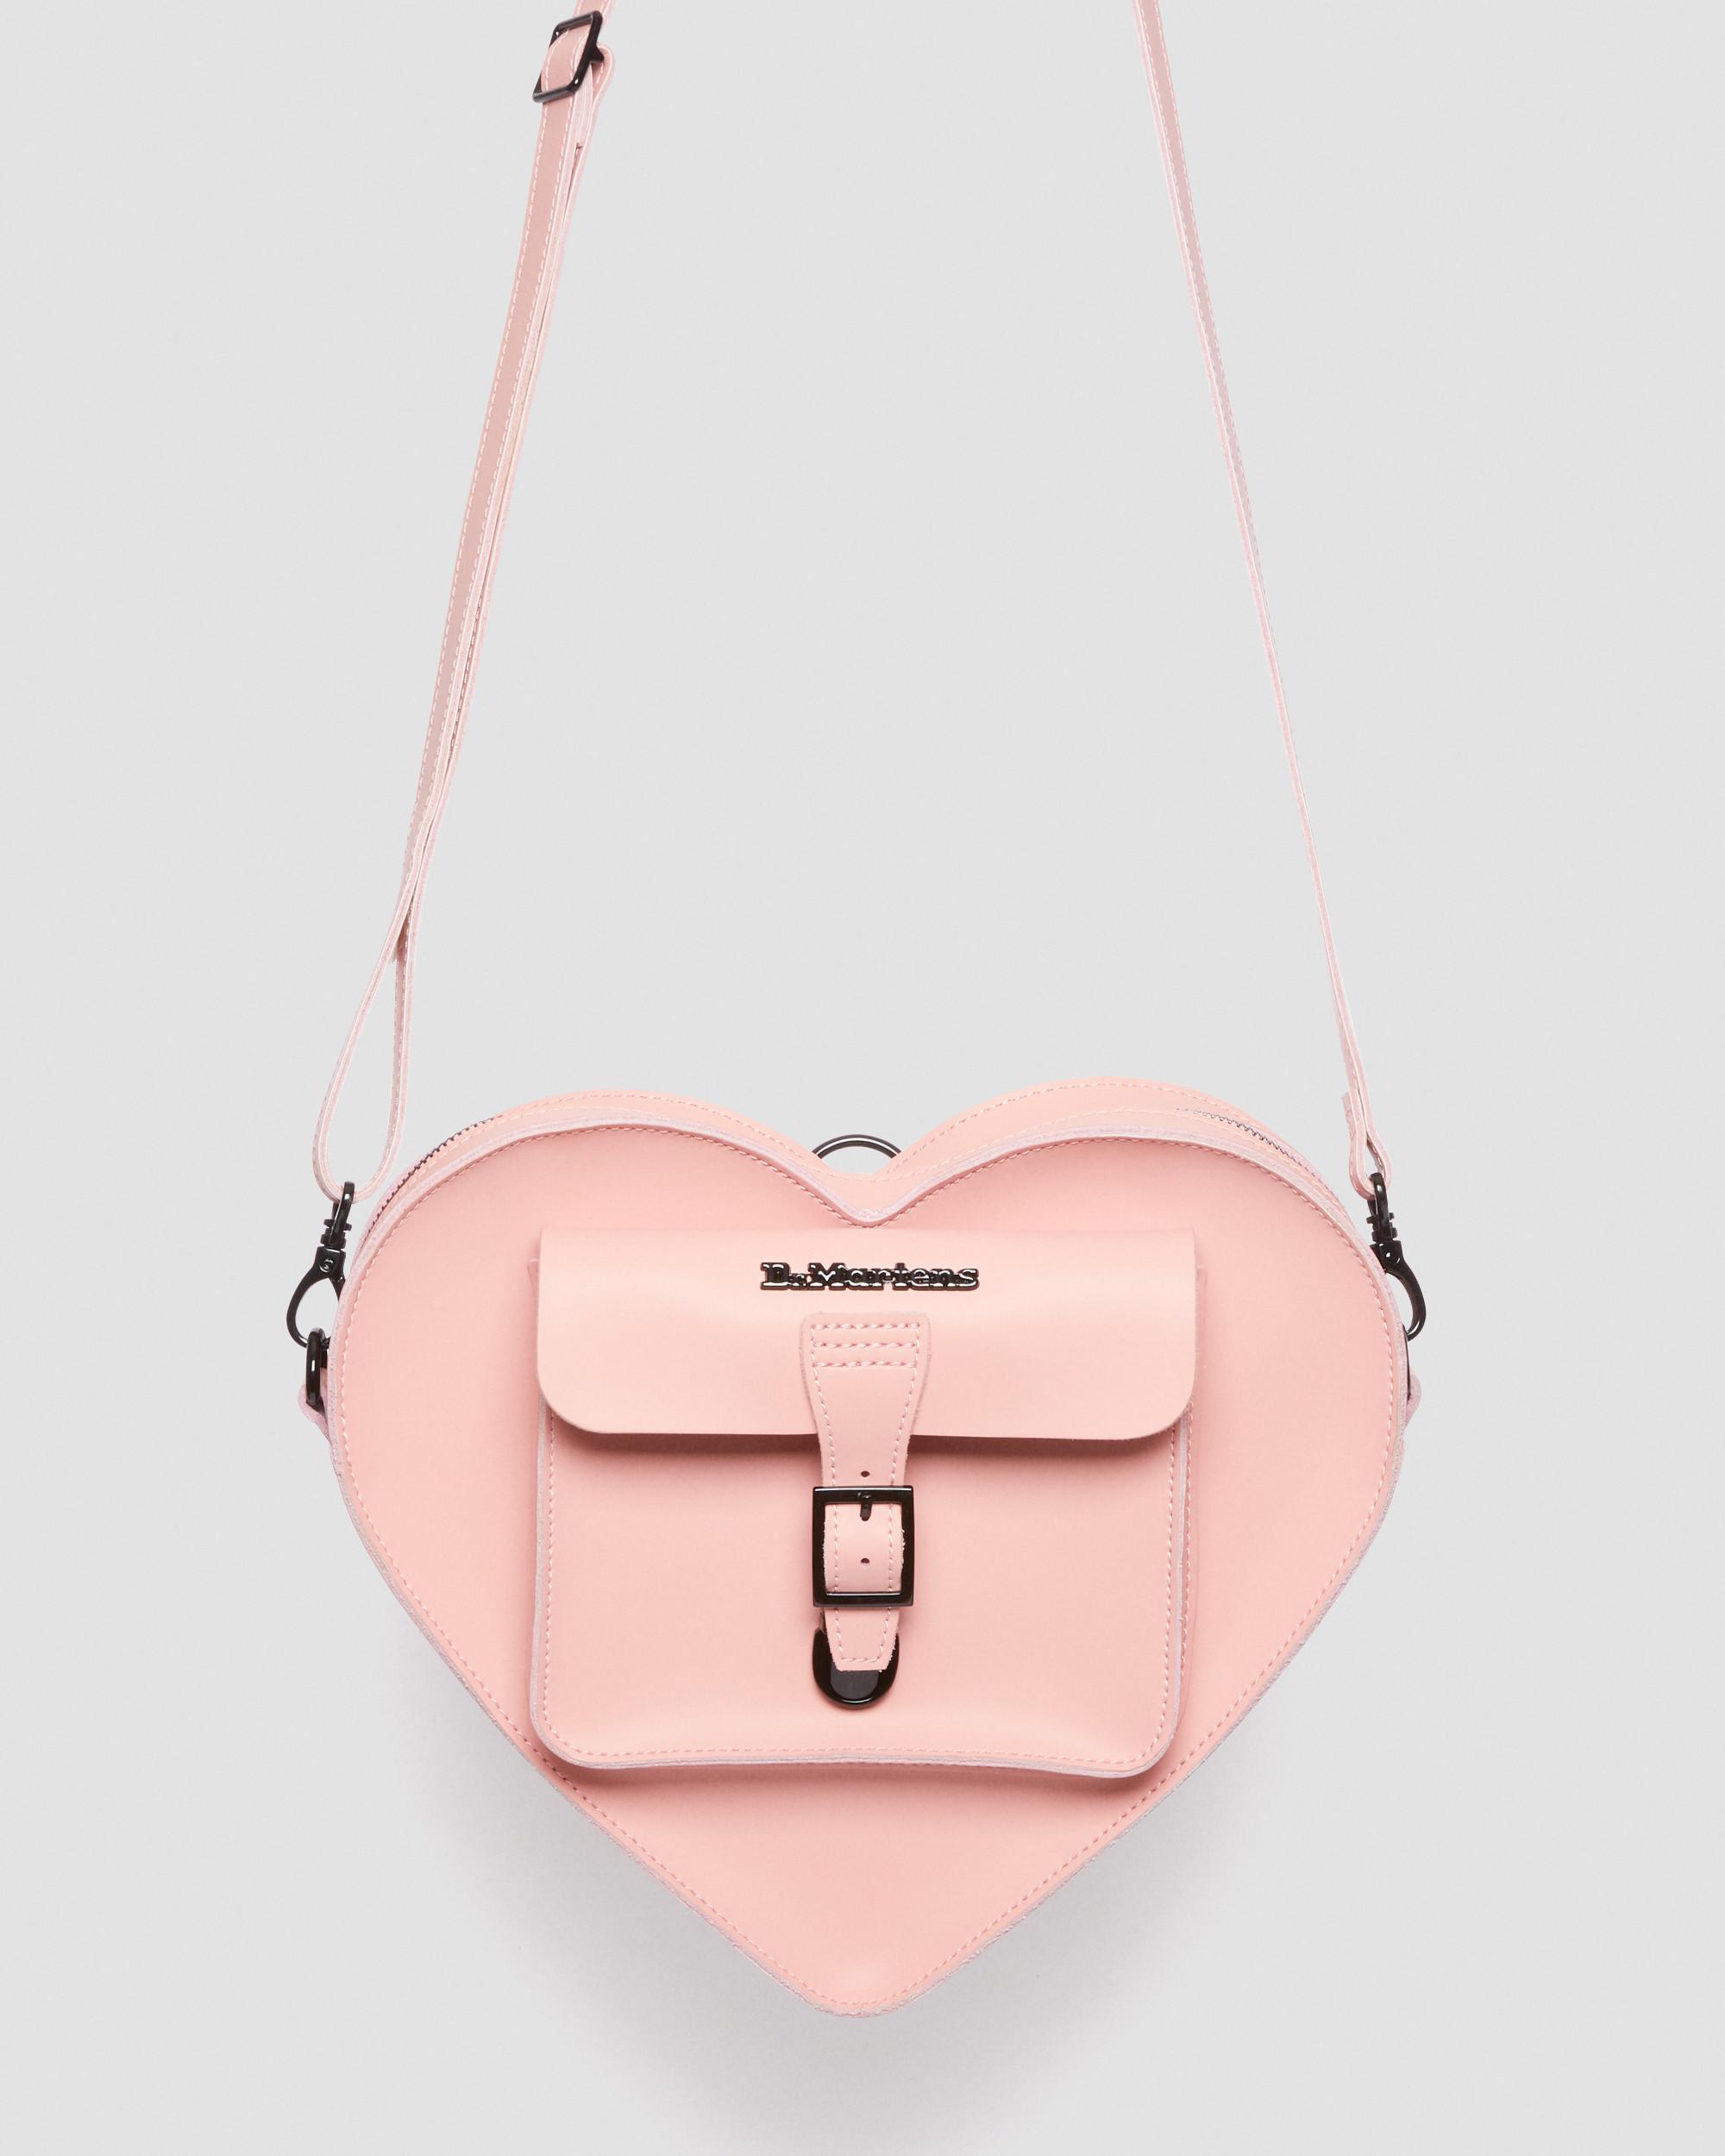 Dr. Martens Heart Shaped Leather Backpack Cross Bag Handbag Purse Peach  Pink